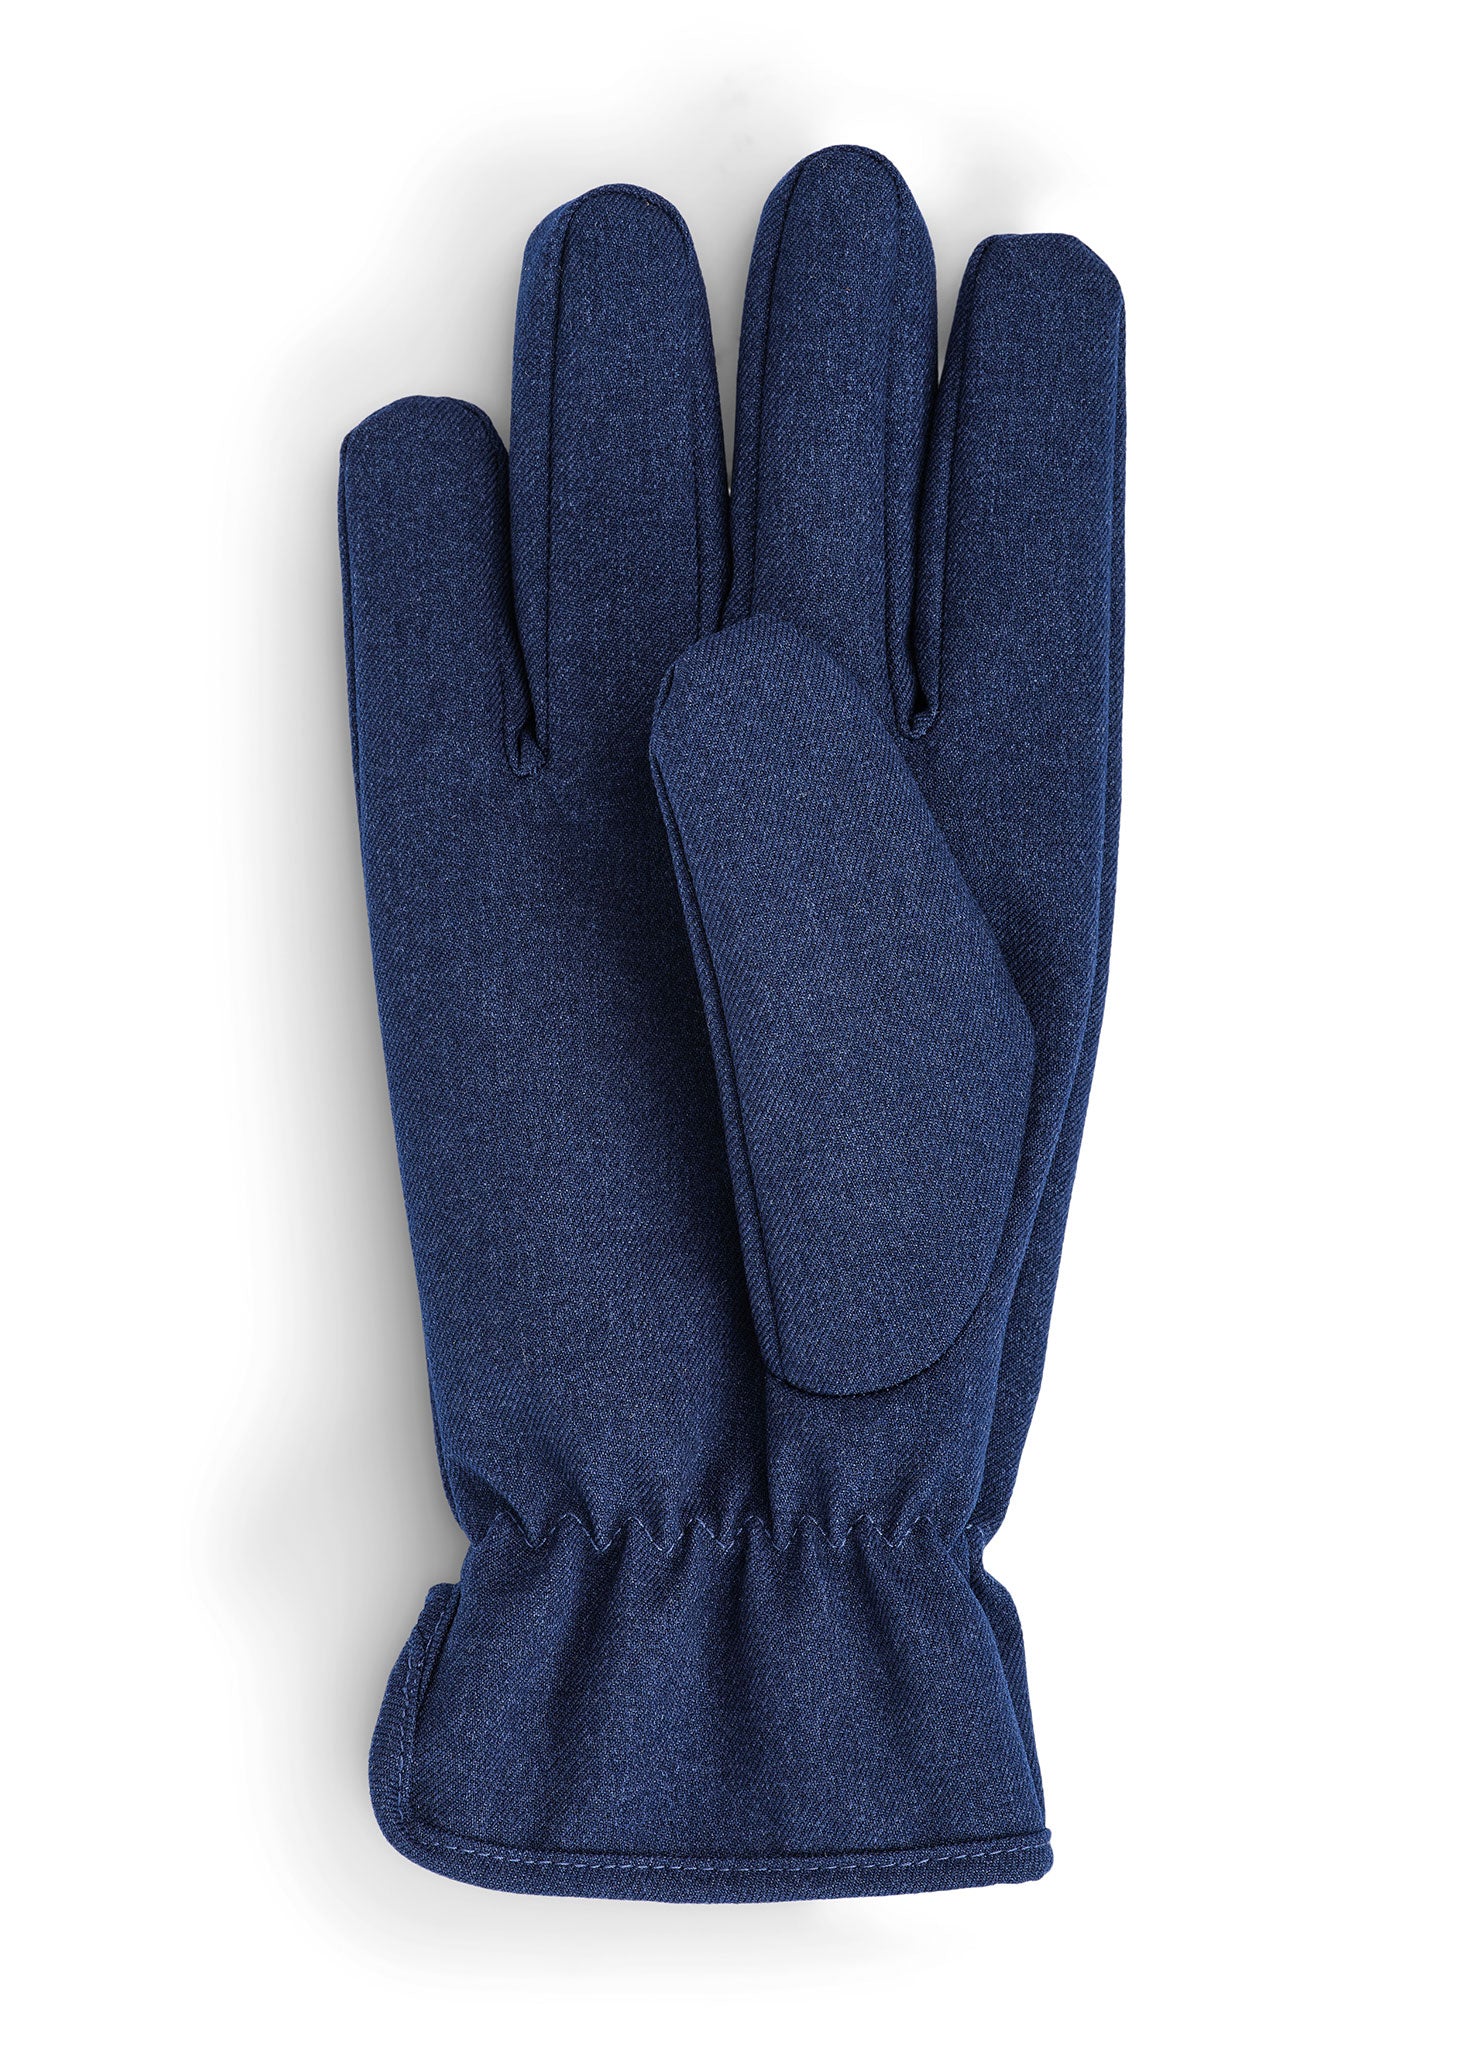 BRGN by Lunde & Gaundal Gloves Accessories 795 Dark Navy